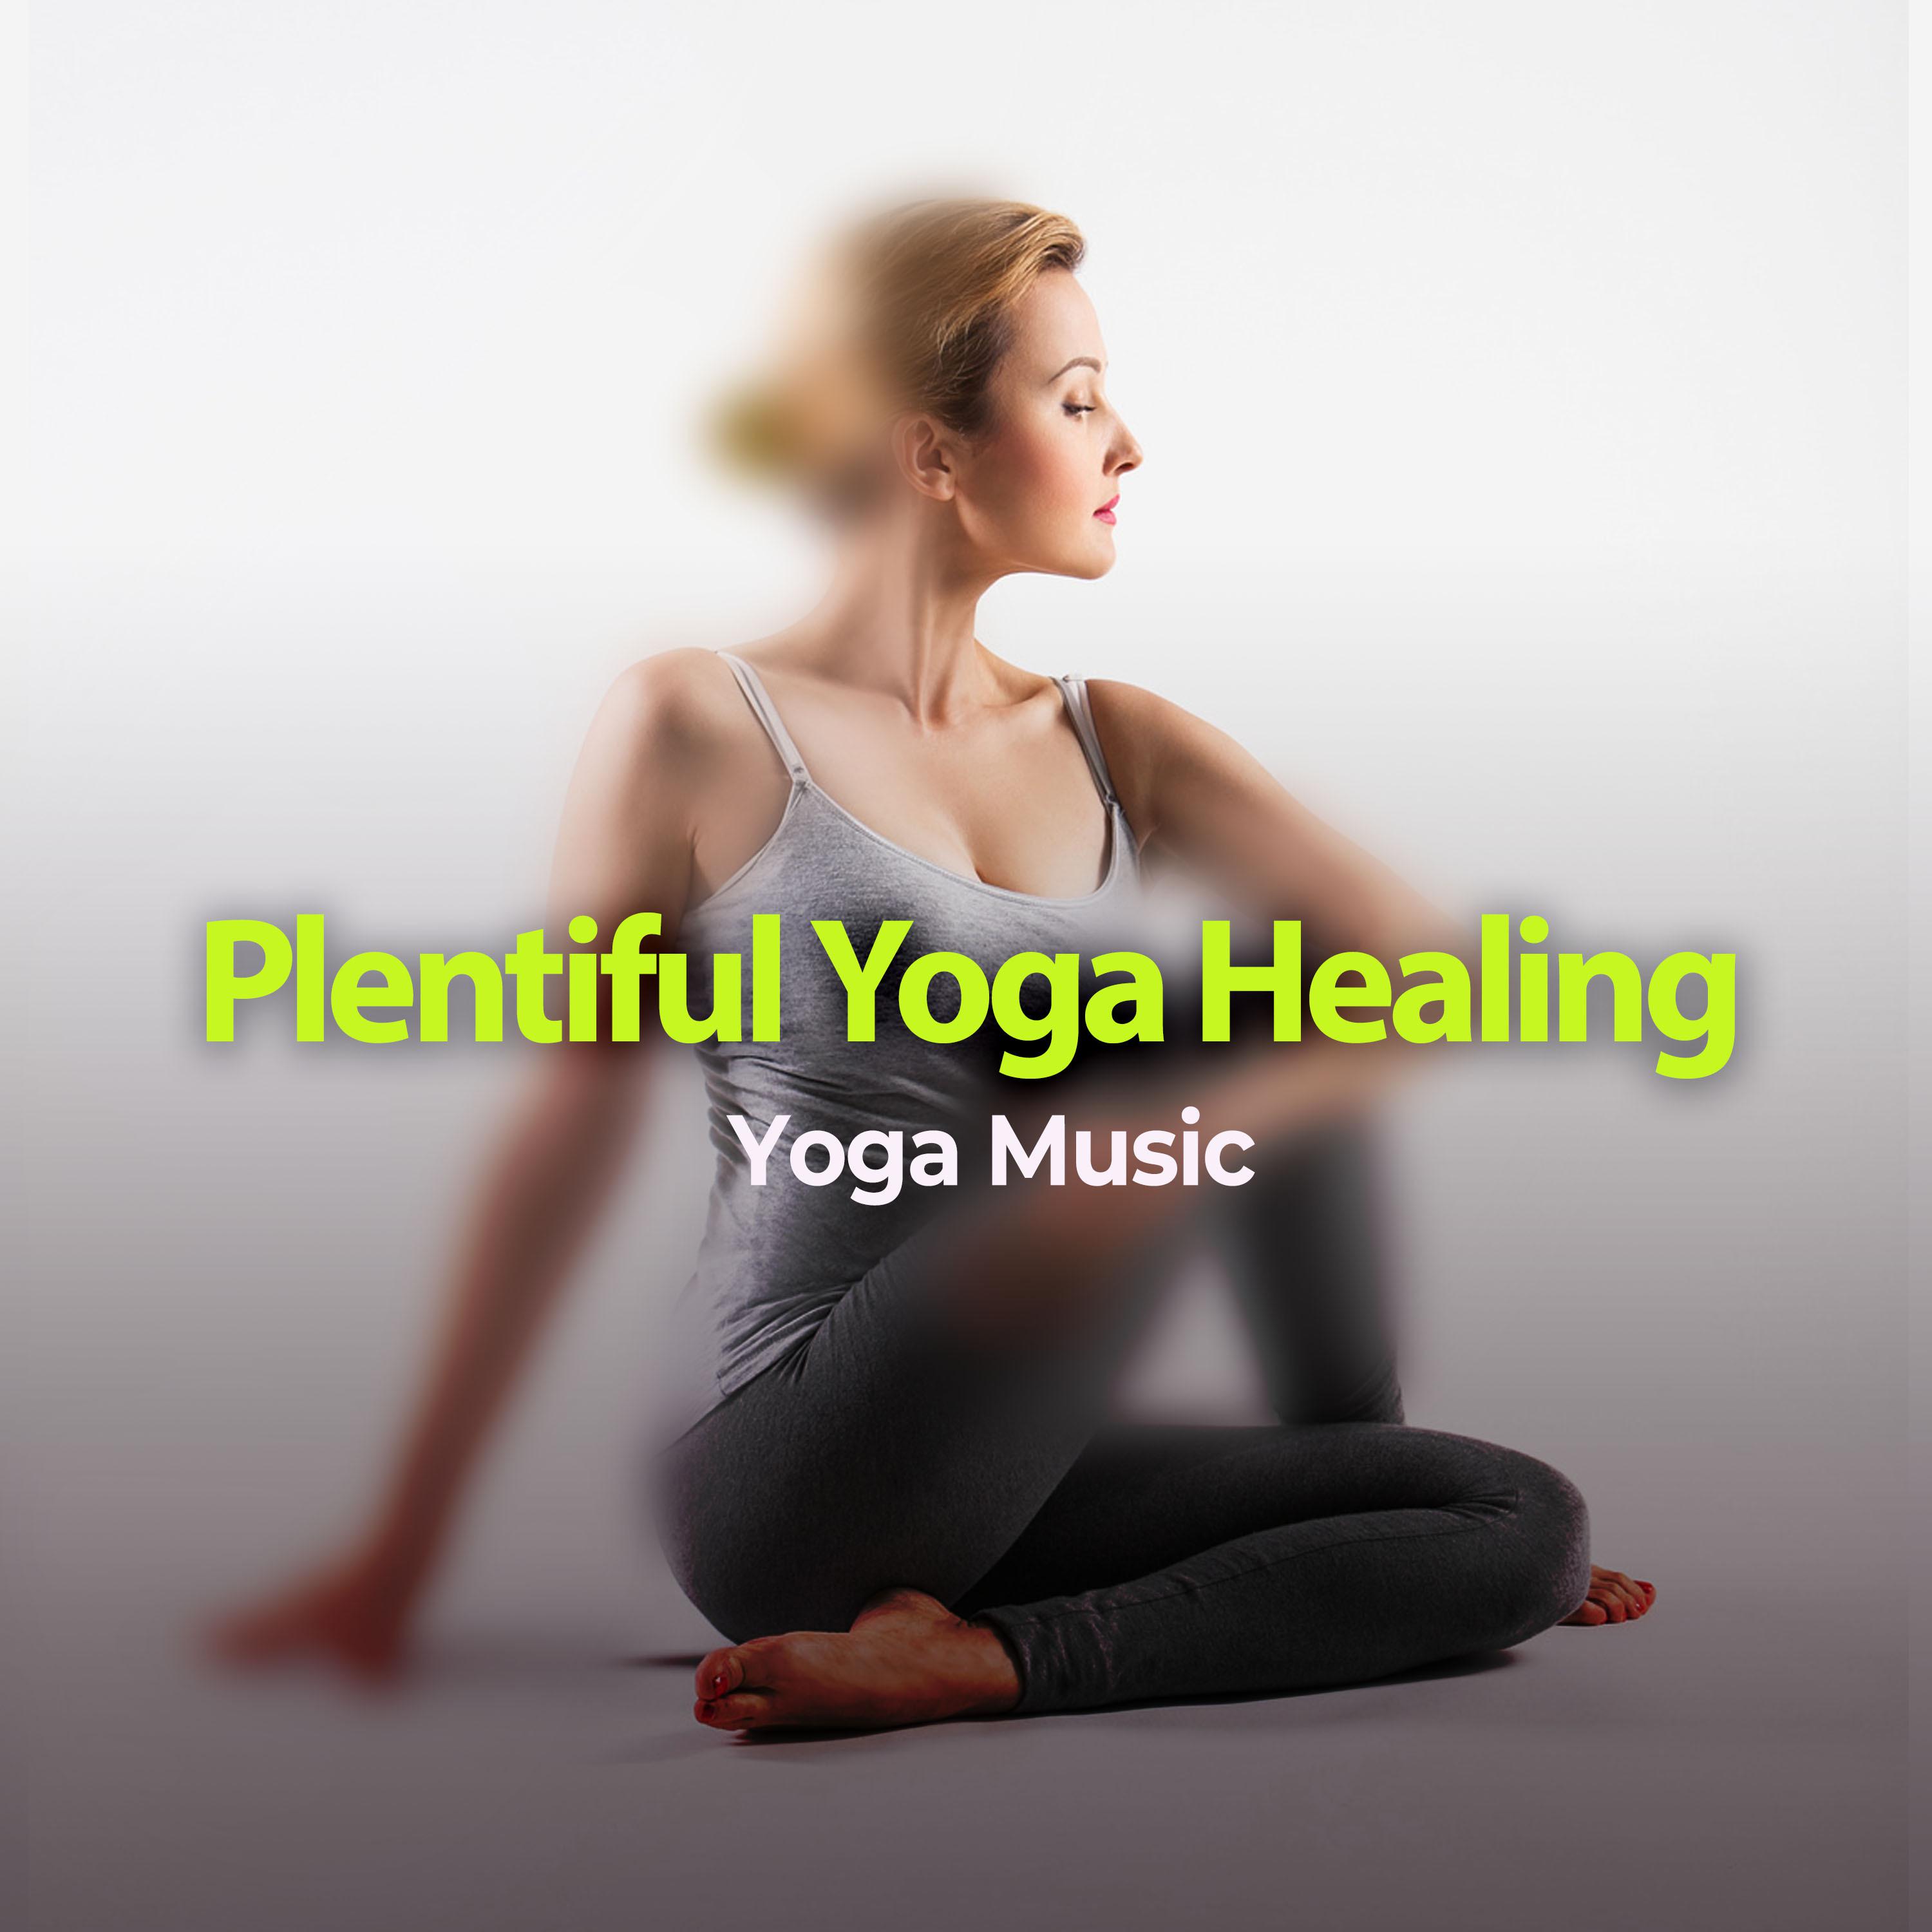 Plentiful Yoga Healing